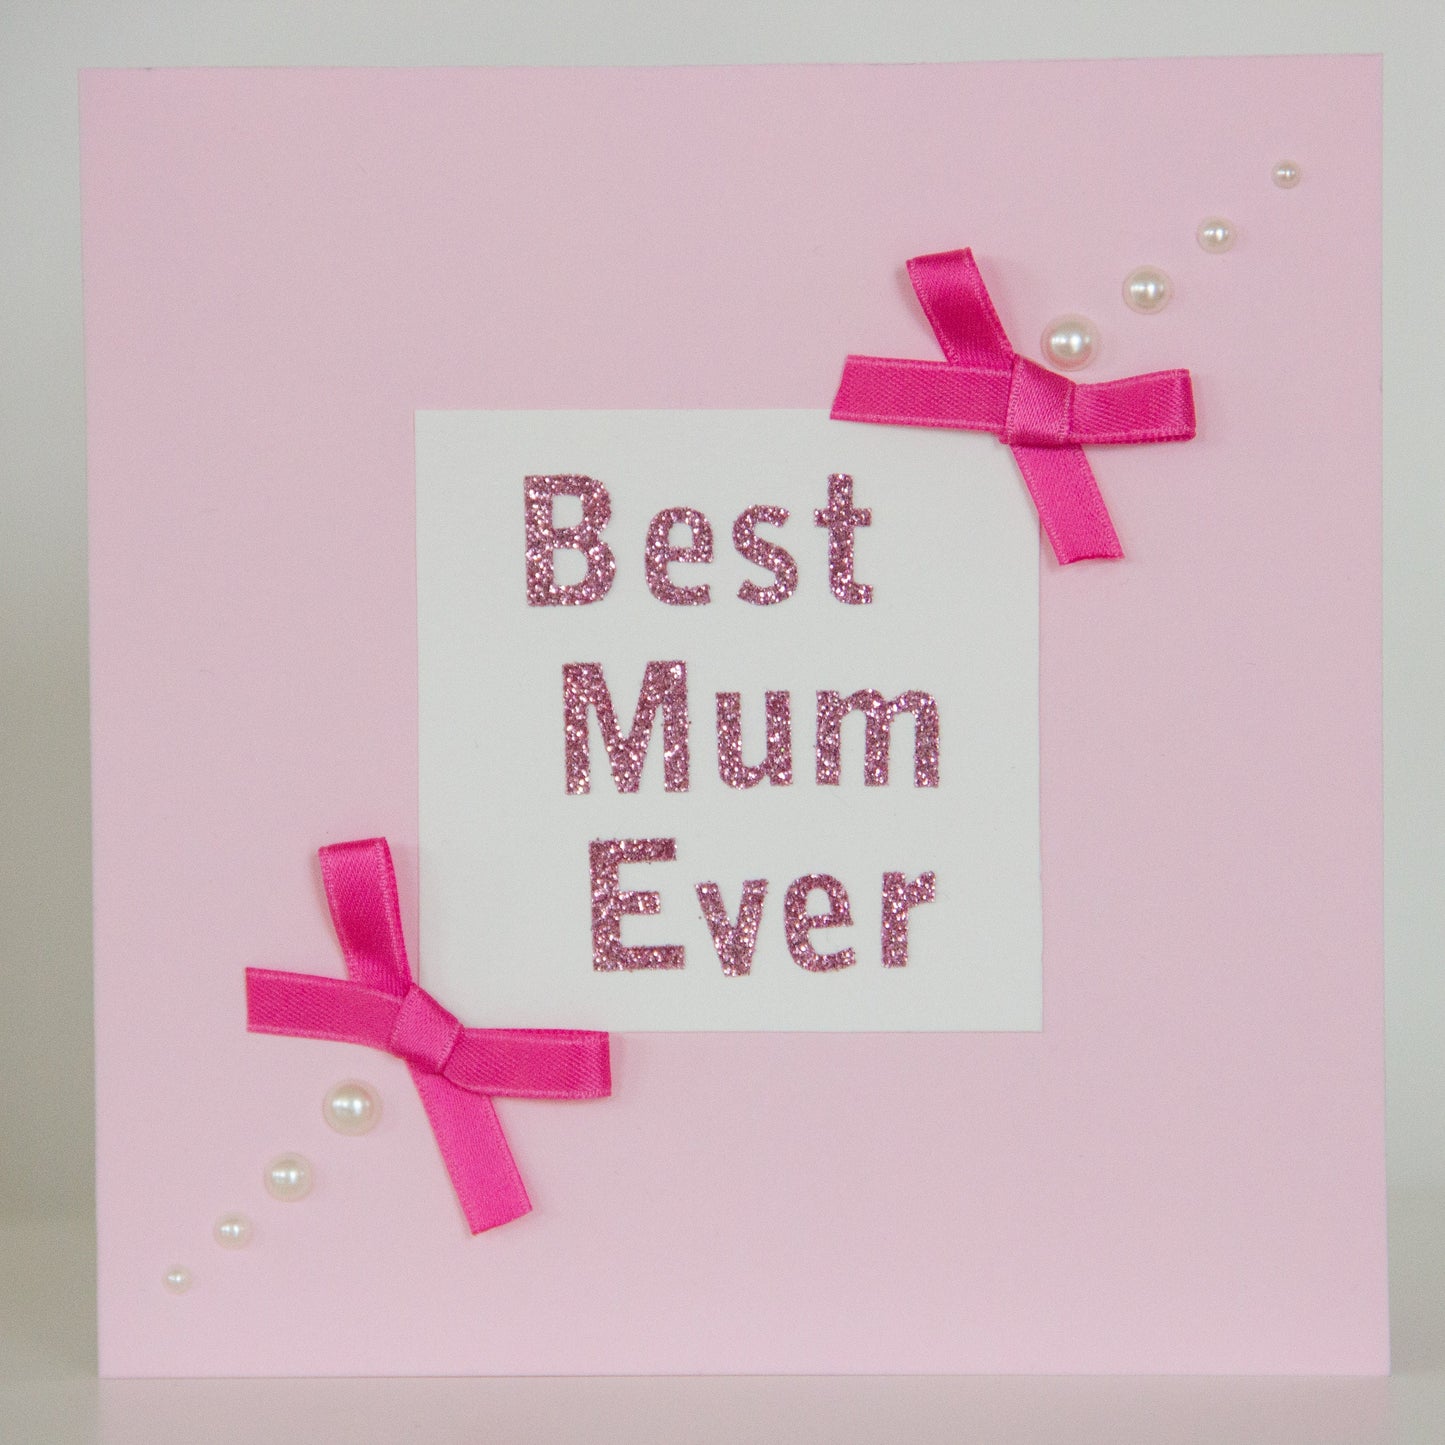 Best Mum Ever card